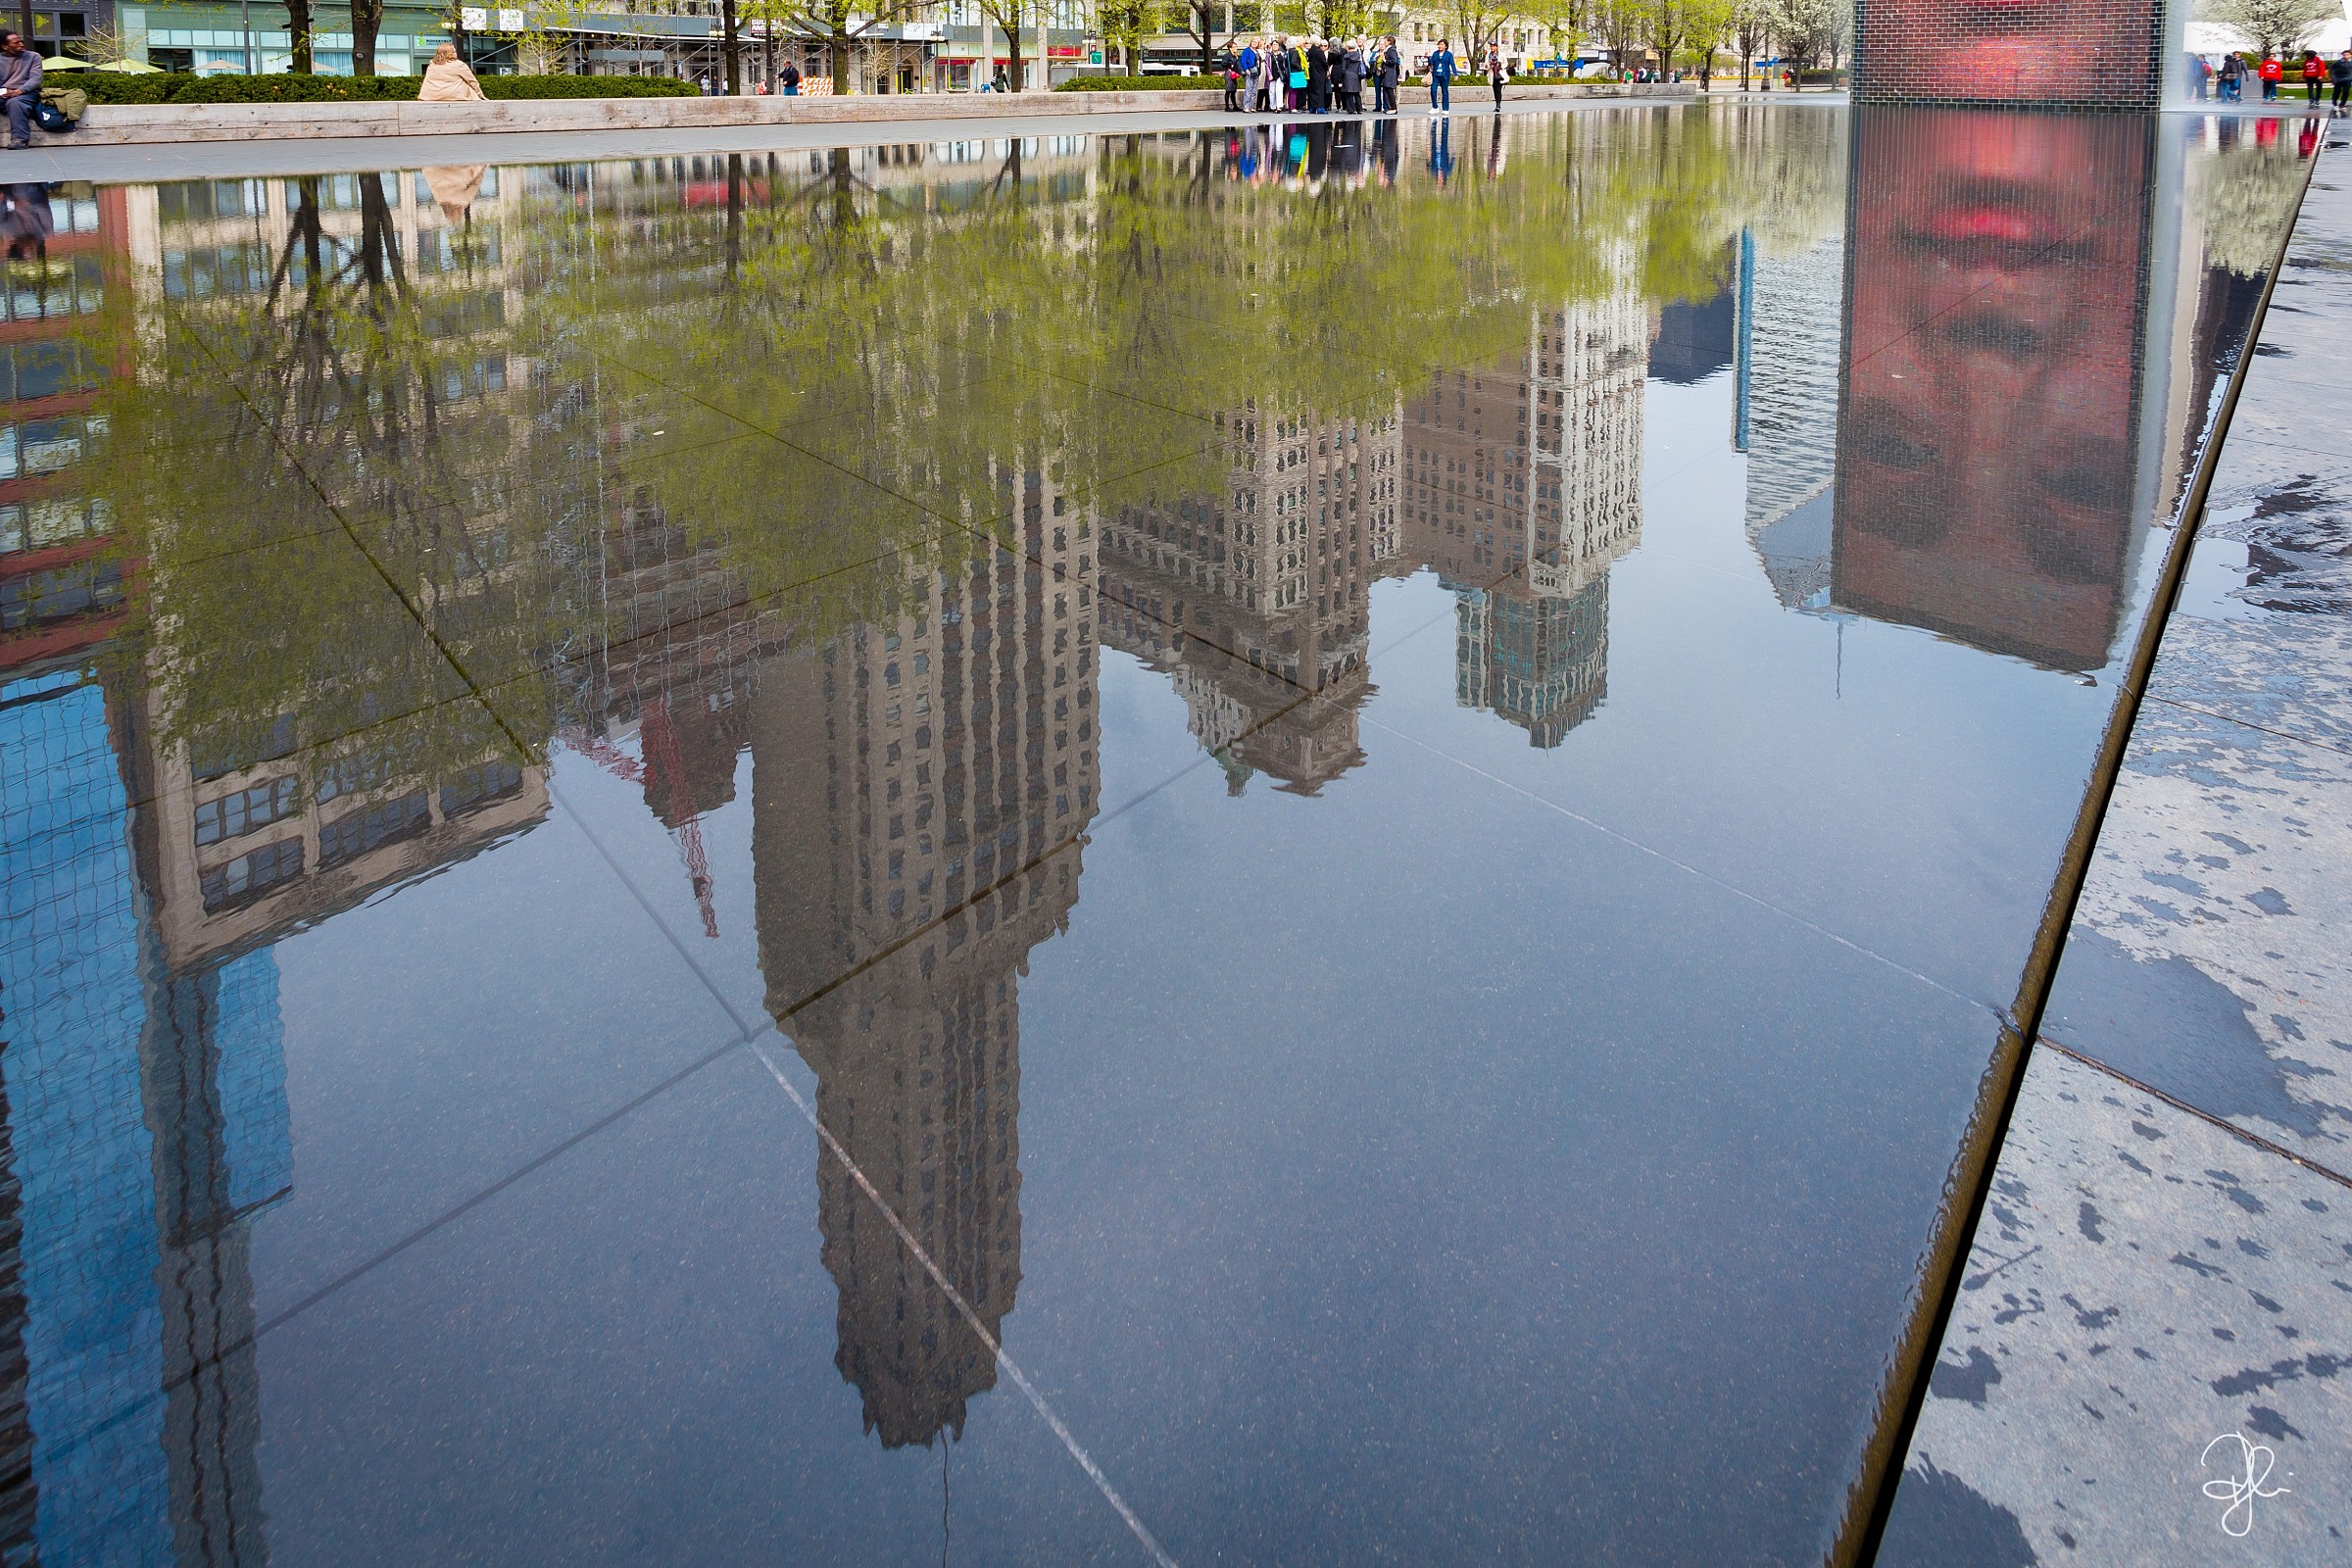 Reflections at Millennium Park...